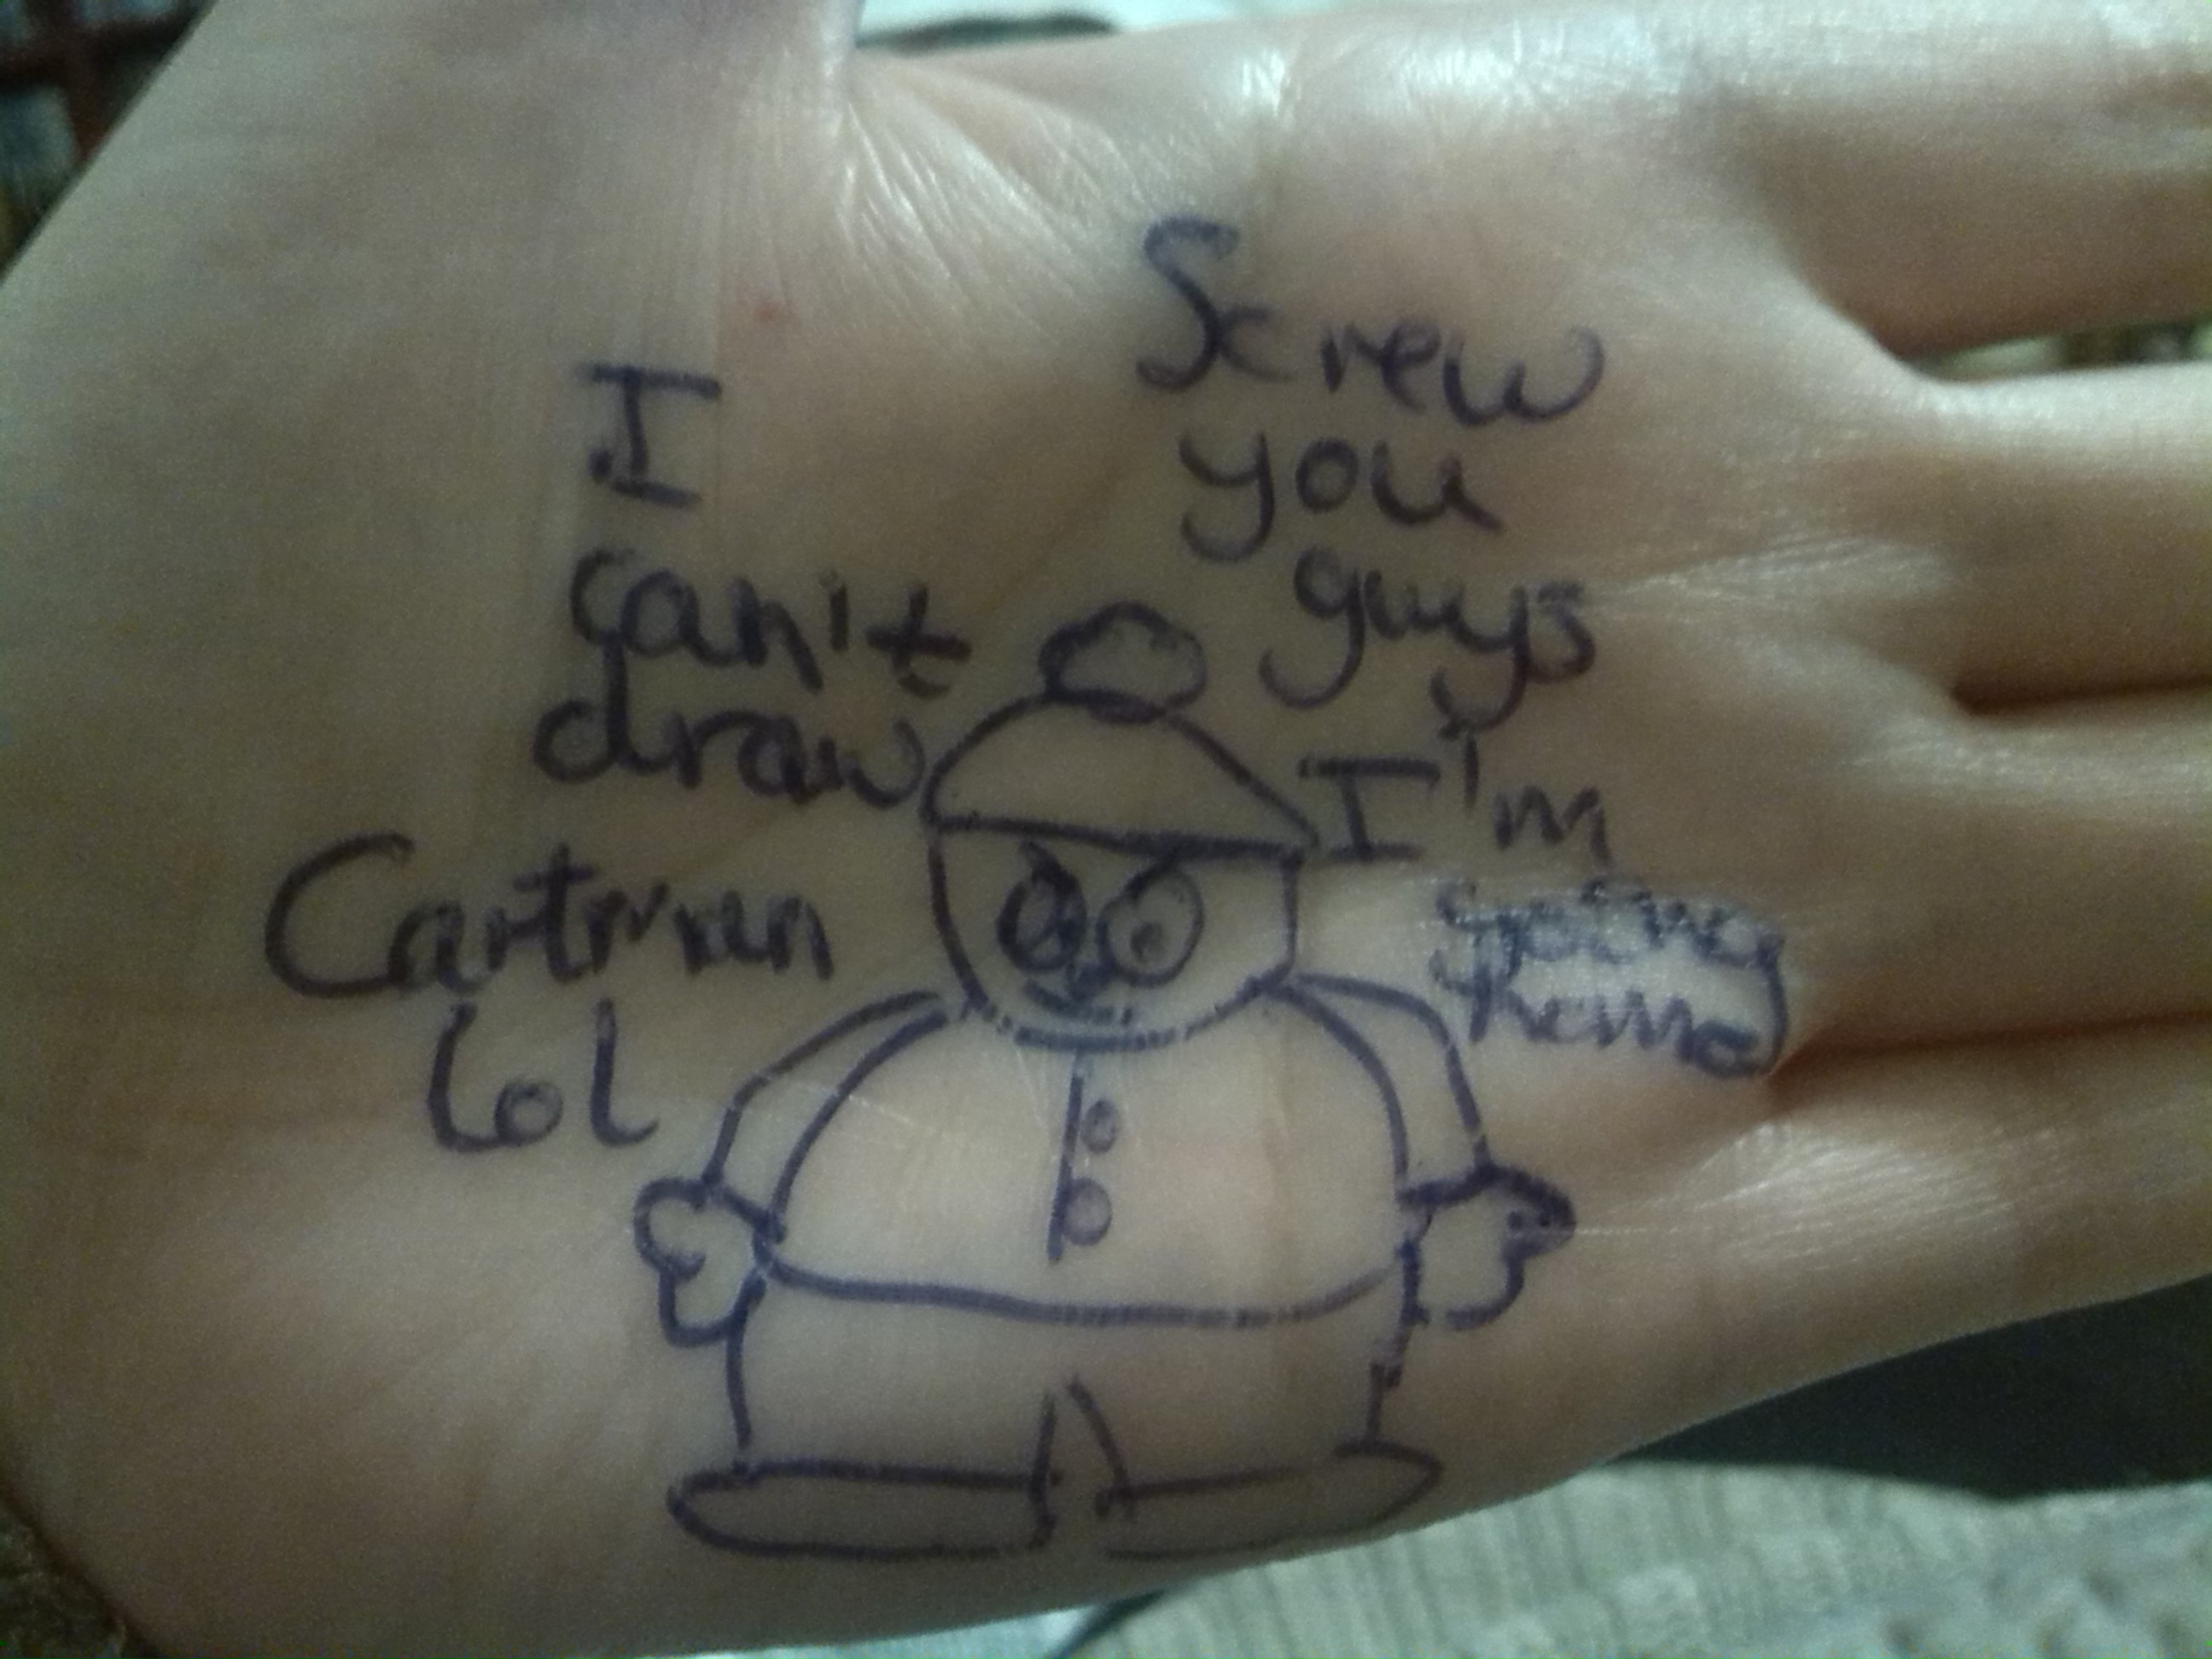 Cartman on my hand by Mandarin123